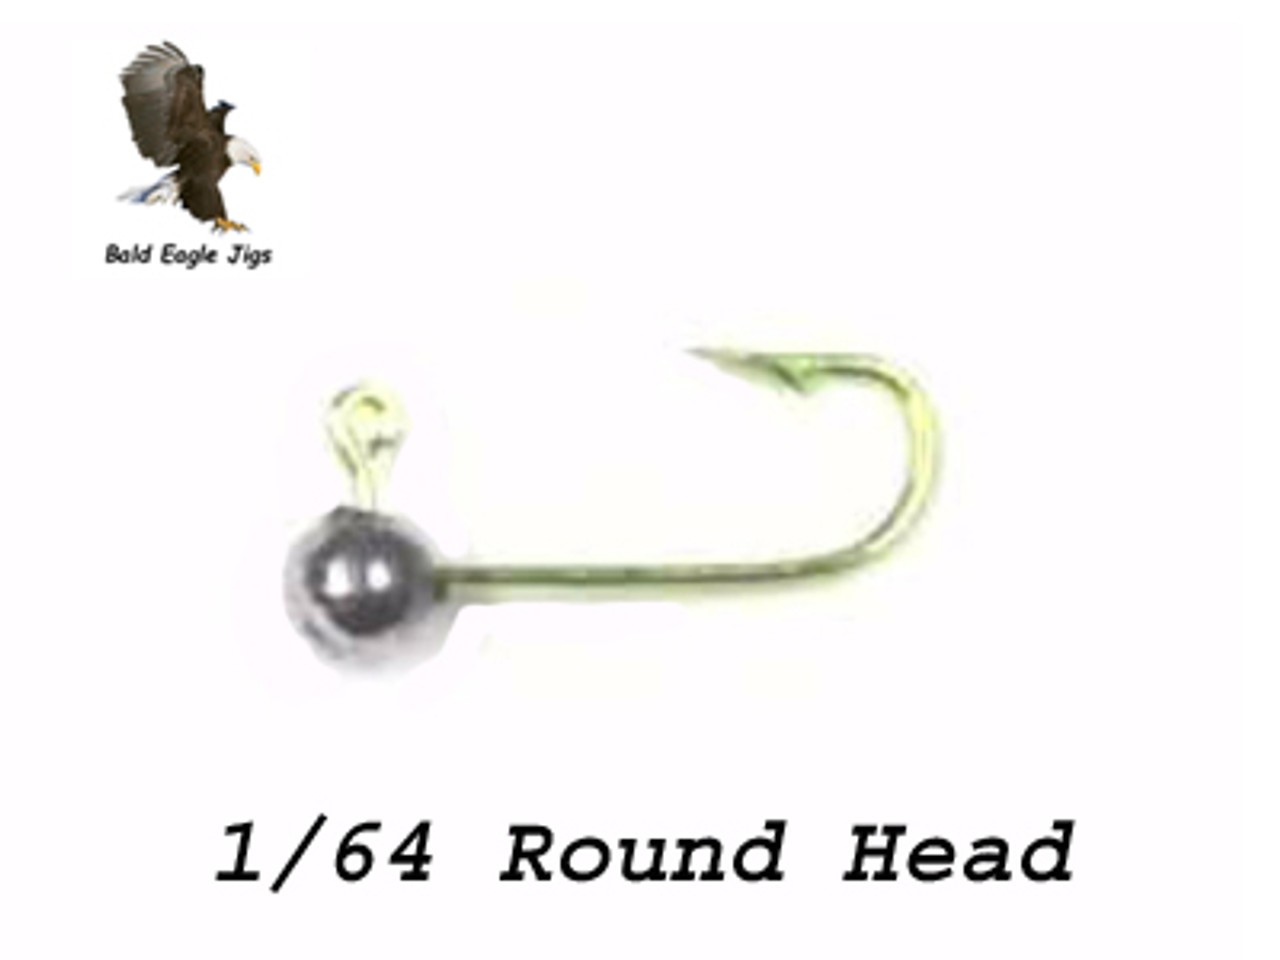 1/64 Oz - 4MM - Round head Live Bait - Bald Eagle Jigs